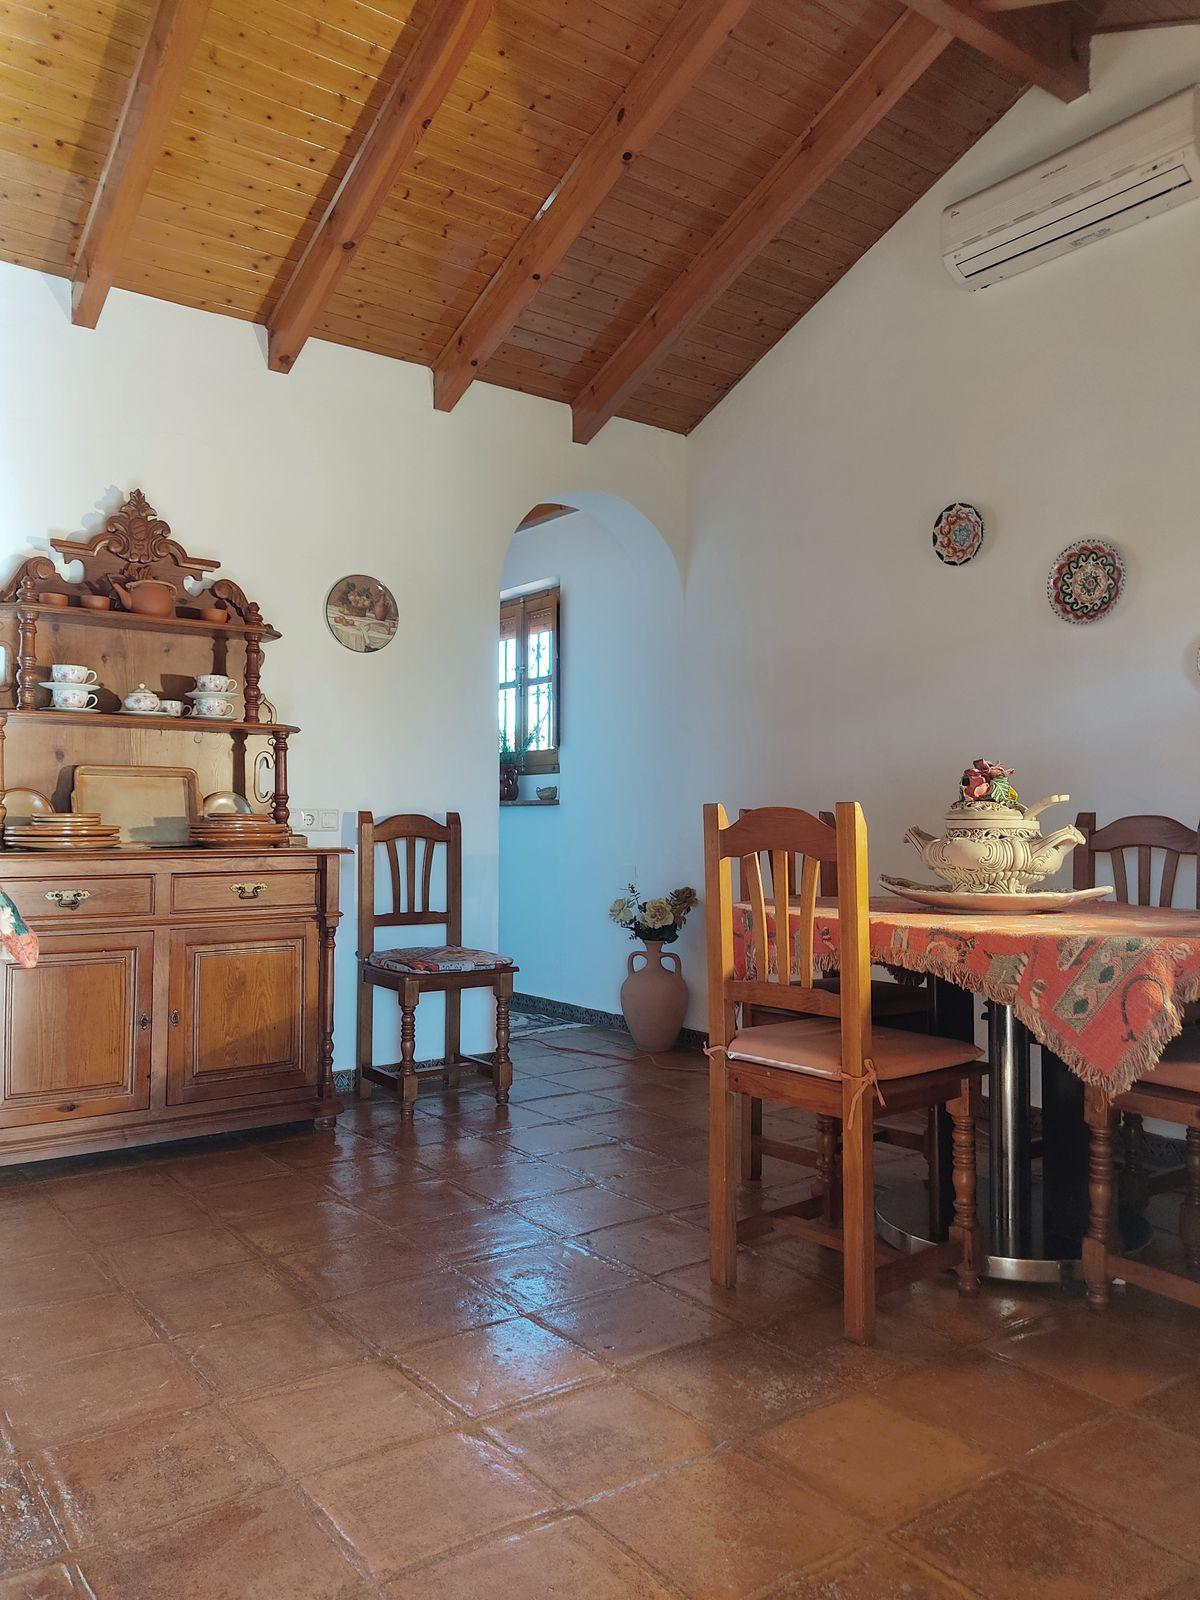 Villa Finca in La Cala de Mijas, Costa del Sol
